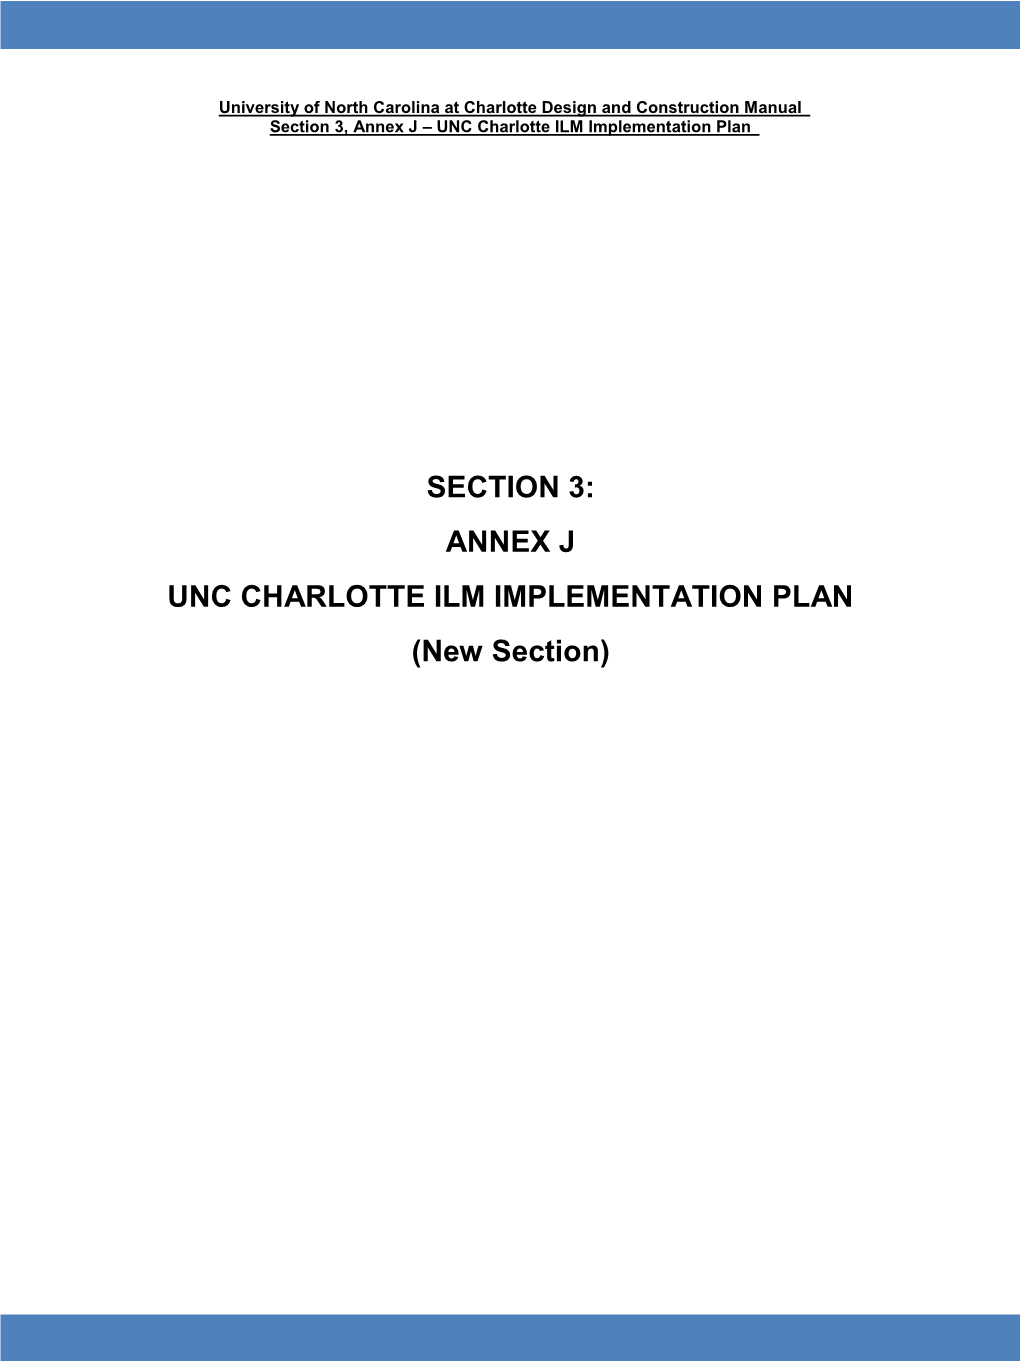 ANNEX J UNC CHARLOTTE ILM IMPLEMENTATION PLAN (New Section)